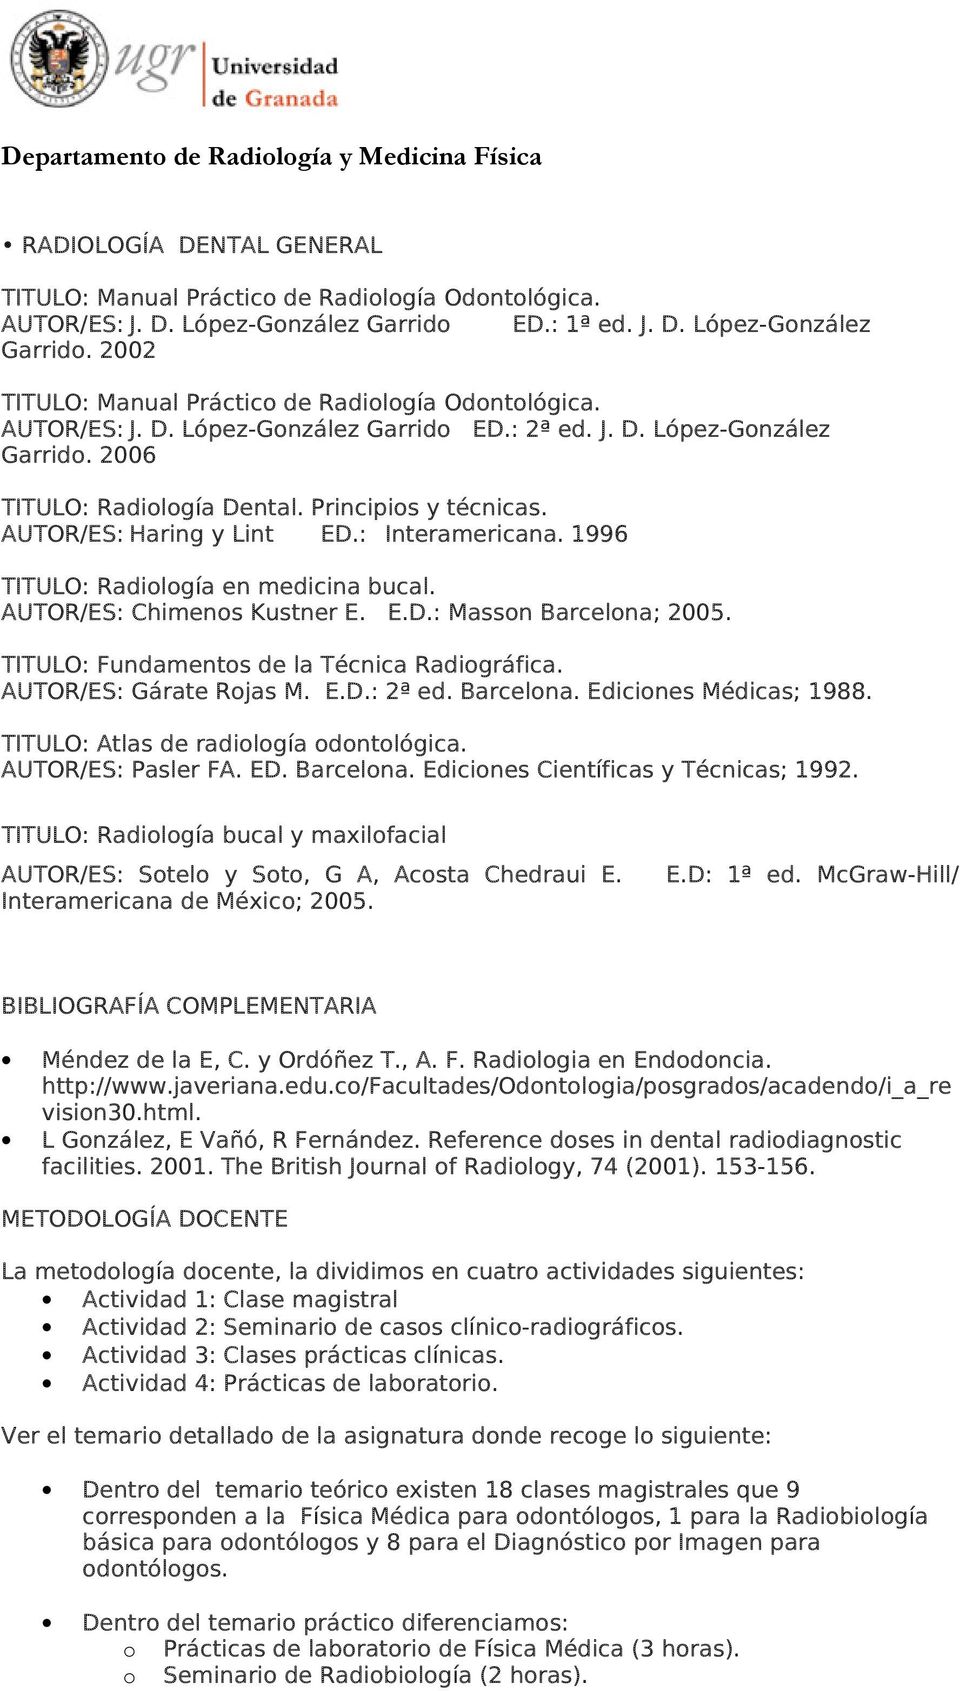 1996 TITULO: Radiología en medicina bucal. AUTOR/ES: Chimenos Kustner E. E.D.: Masson Barcelona; 2005. TITULO: Fundamentos de la Técnica Radiográfica. AUTOR/ES: Gárate Rojas M. E.D.: 2ª ed. Barcelona. Ediciones Médicas; 1988.